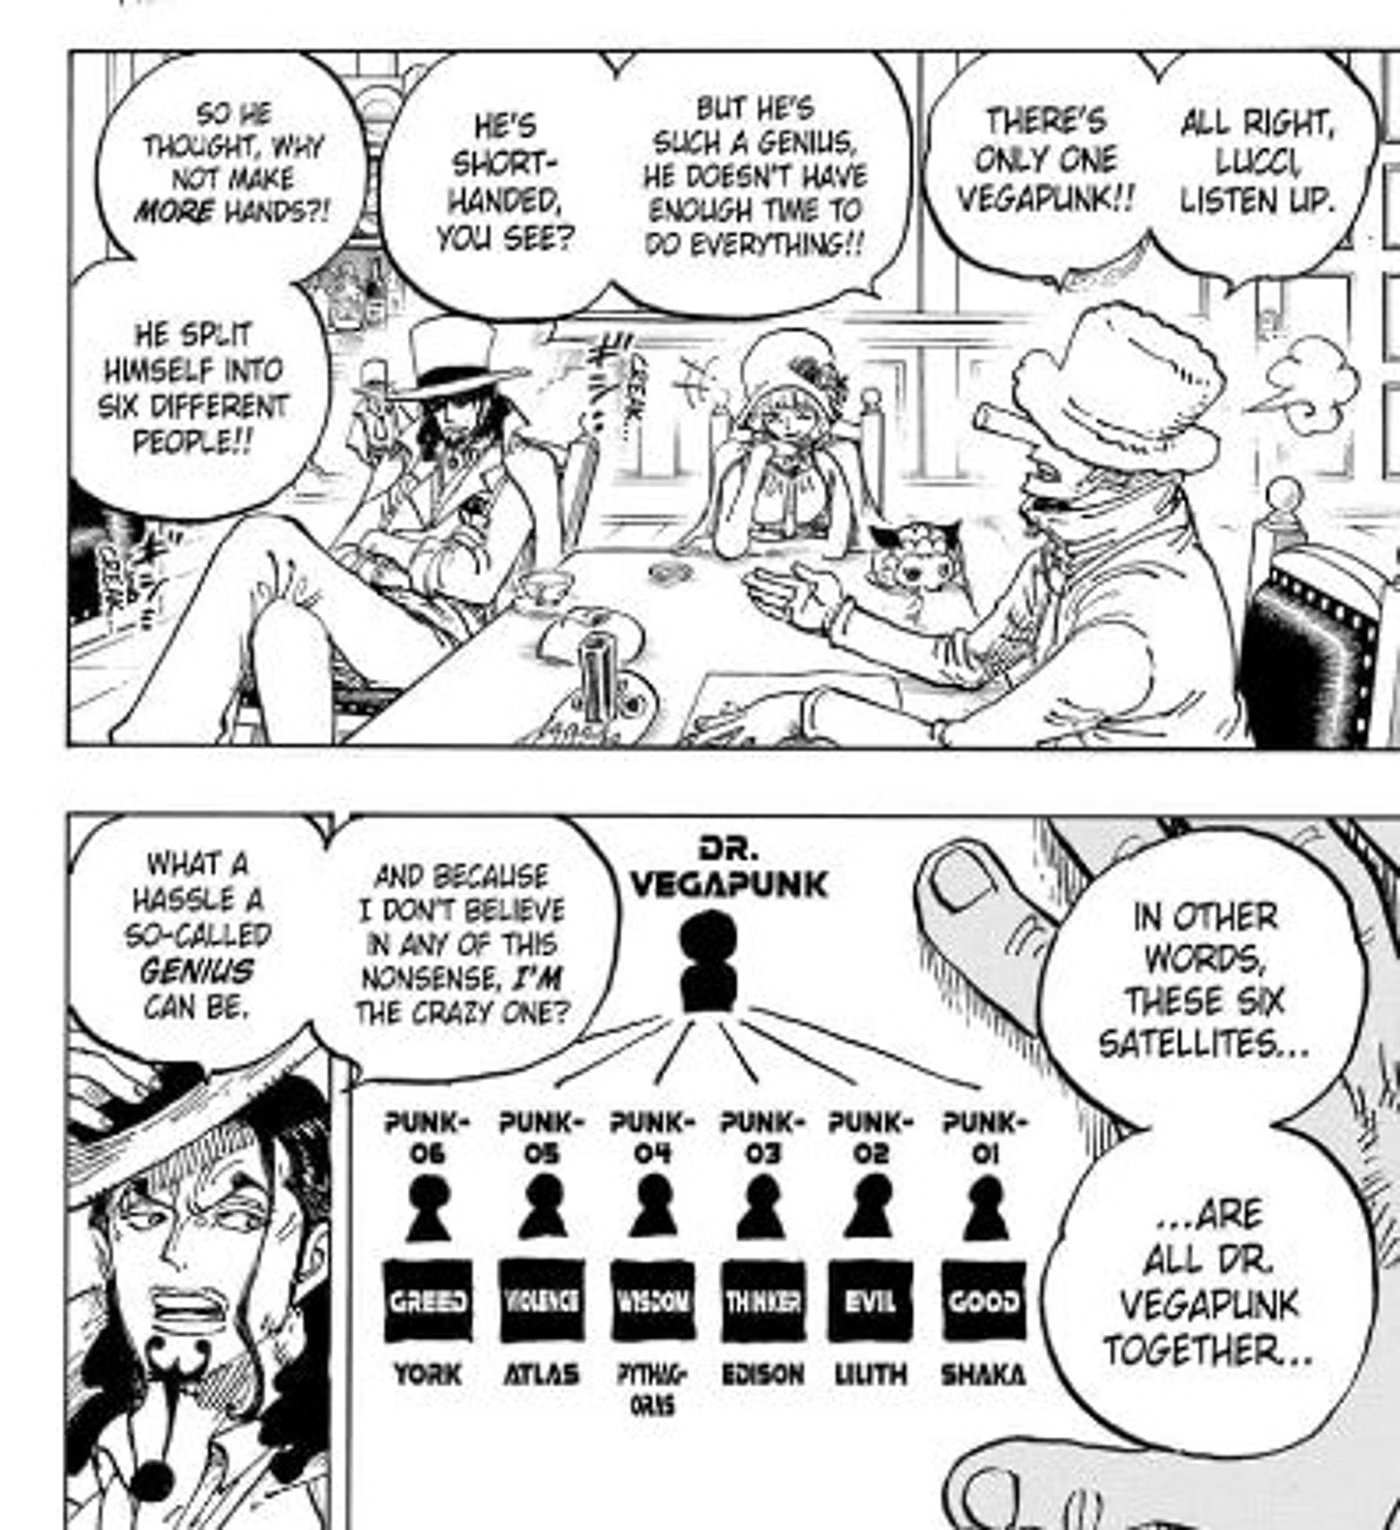 One-Piece-1062-Vegapunk-teoria